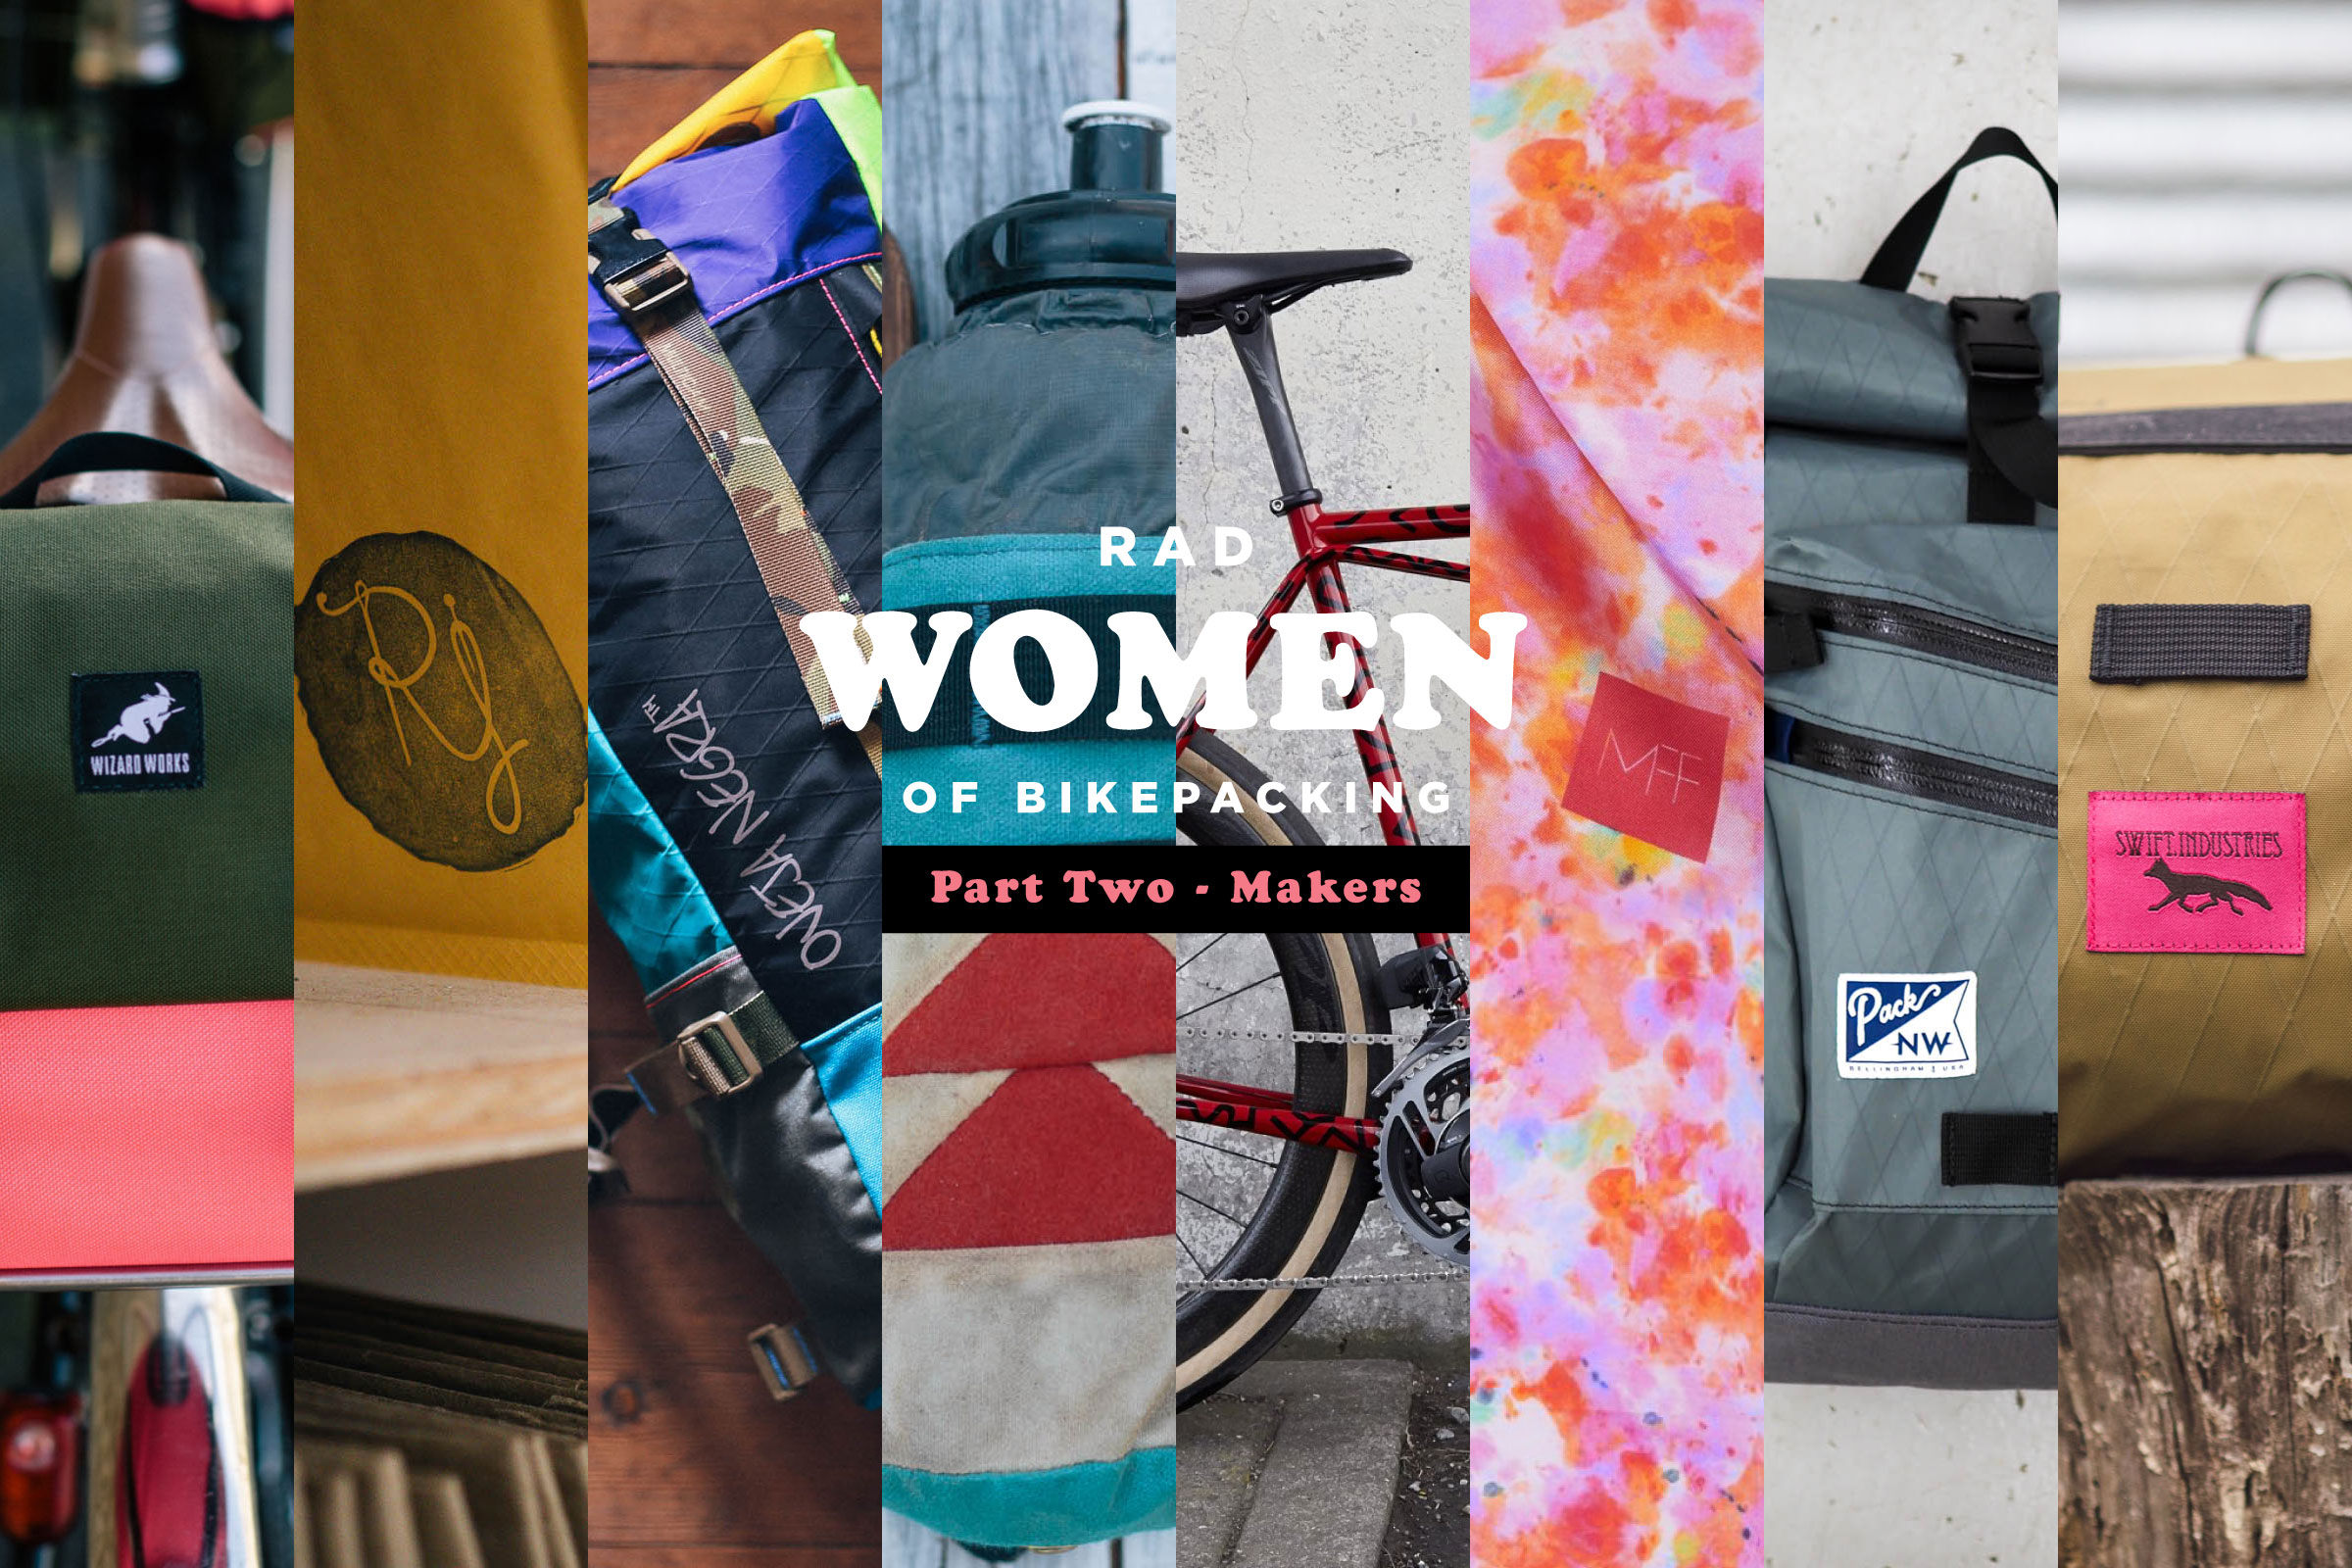 Rad Women of Bikepacking, Makers